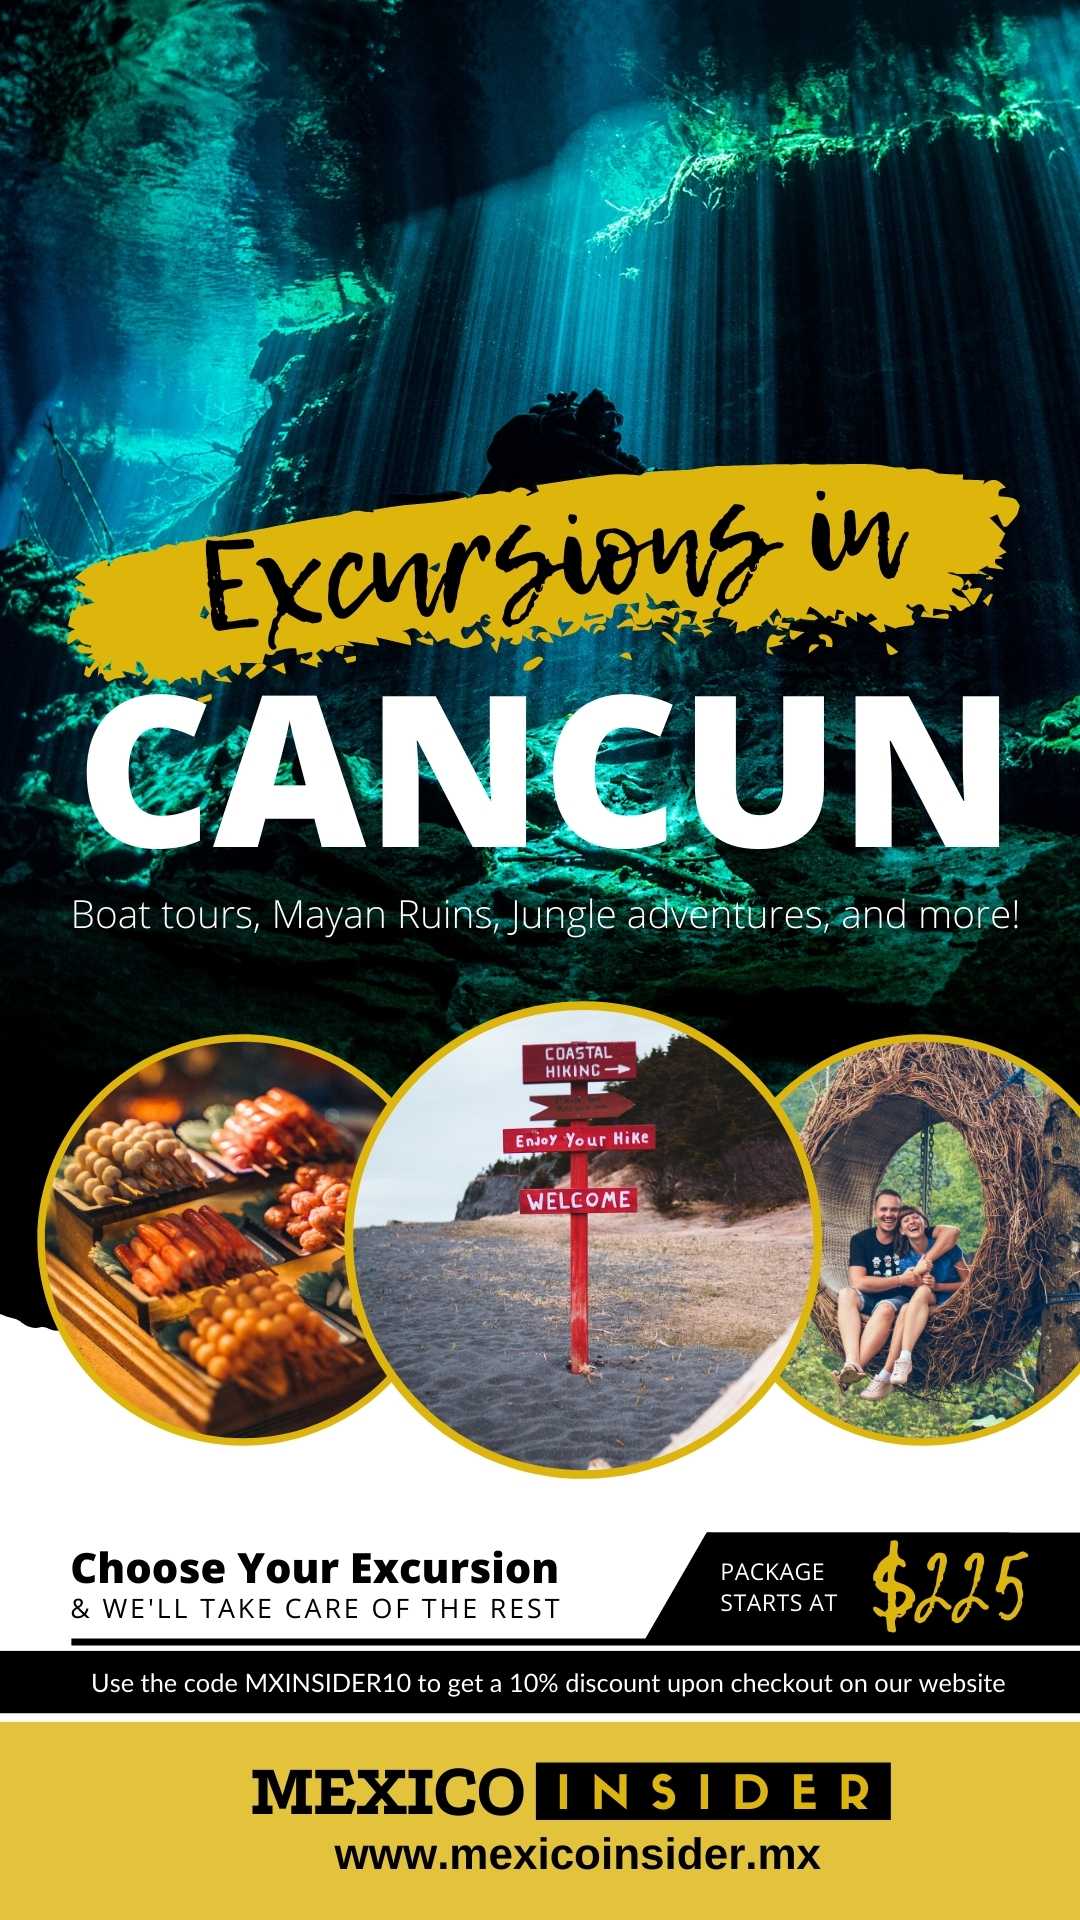 cancun excursions